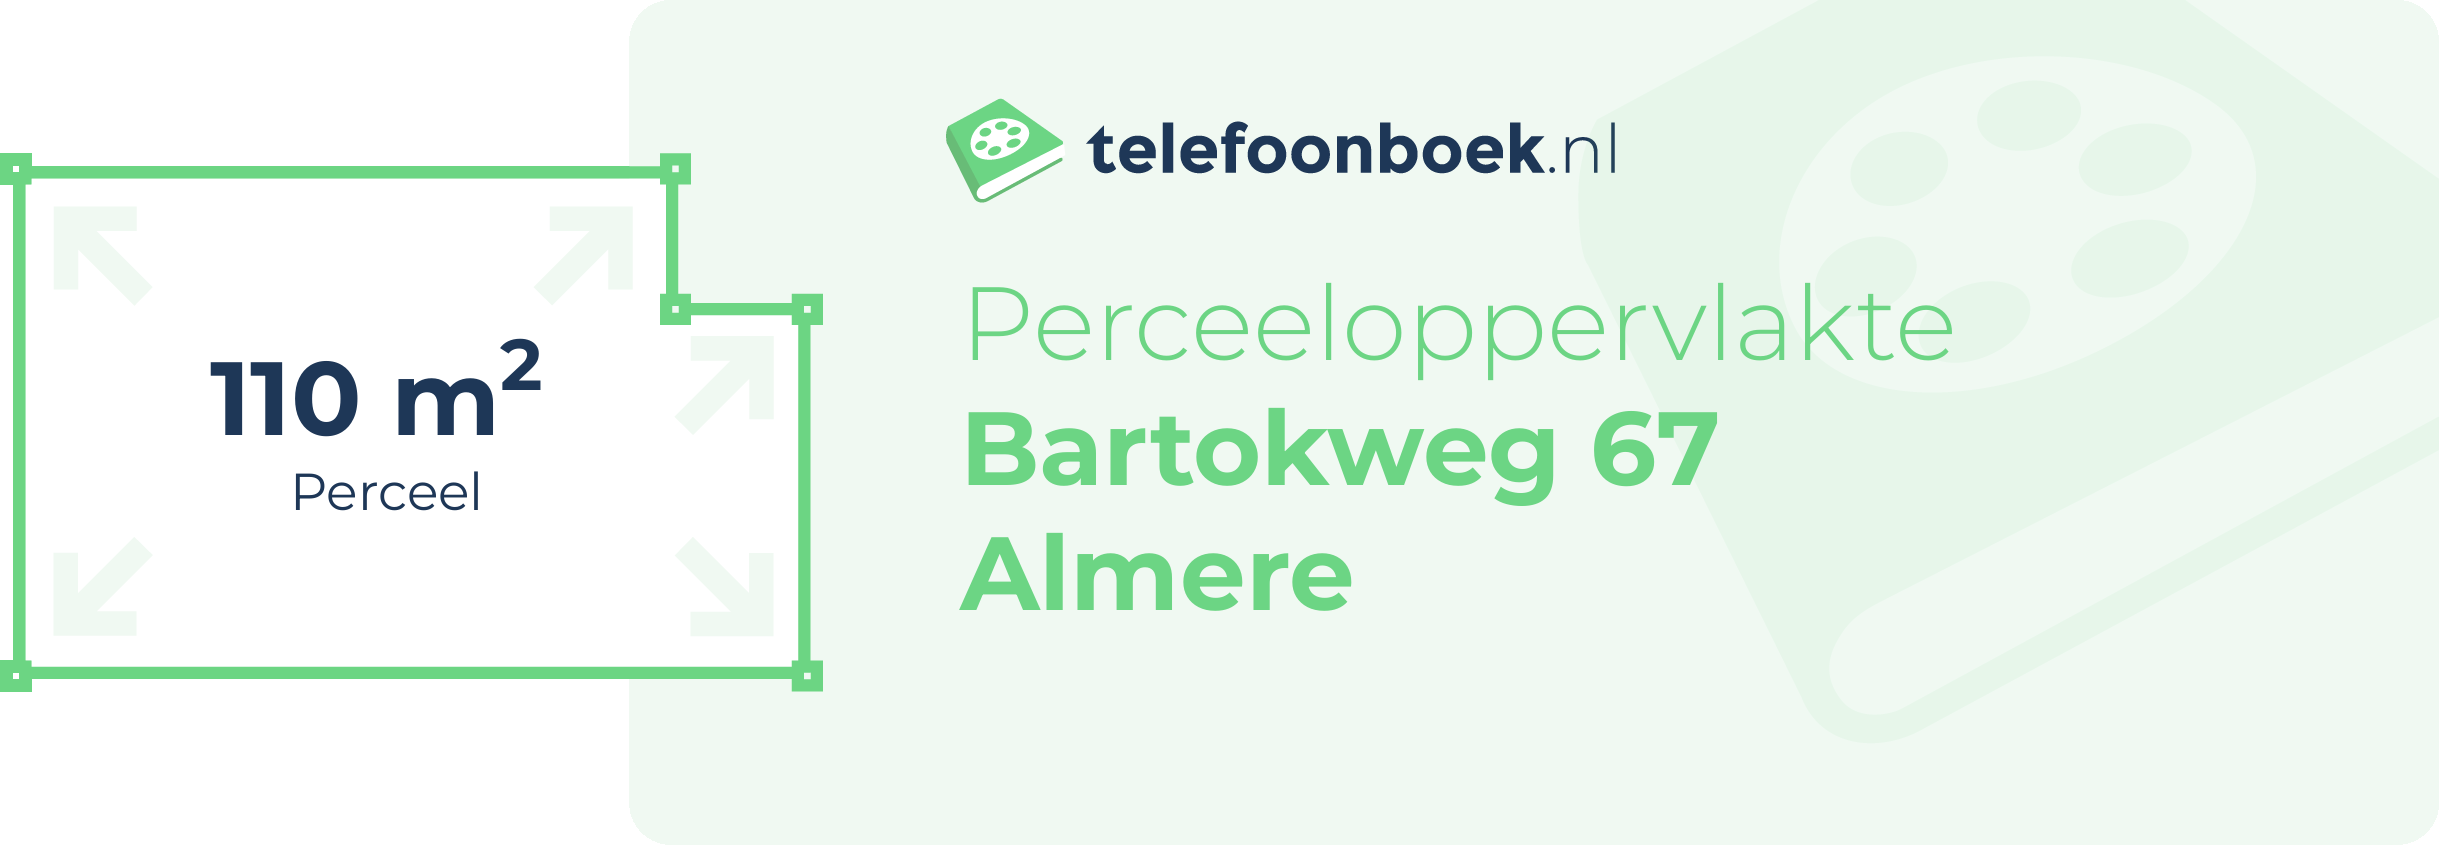 Perceeloppervlakte Bartokweg 67 Almere